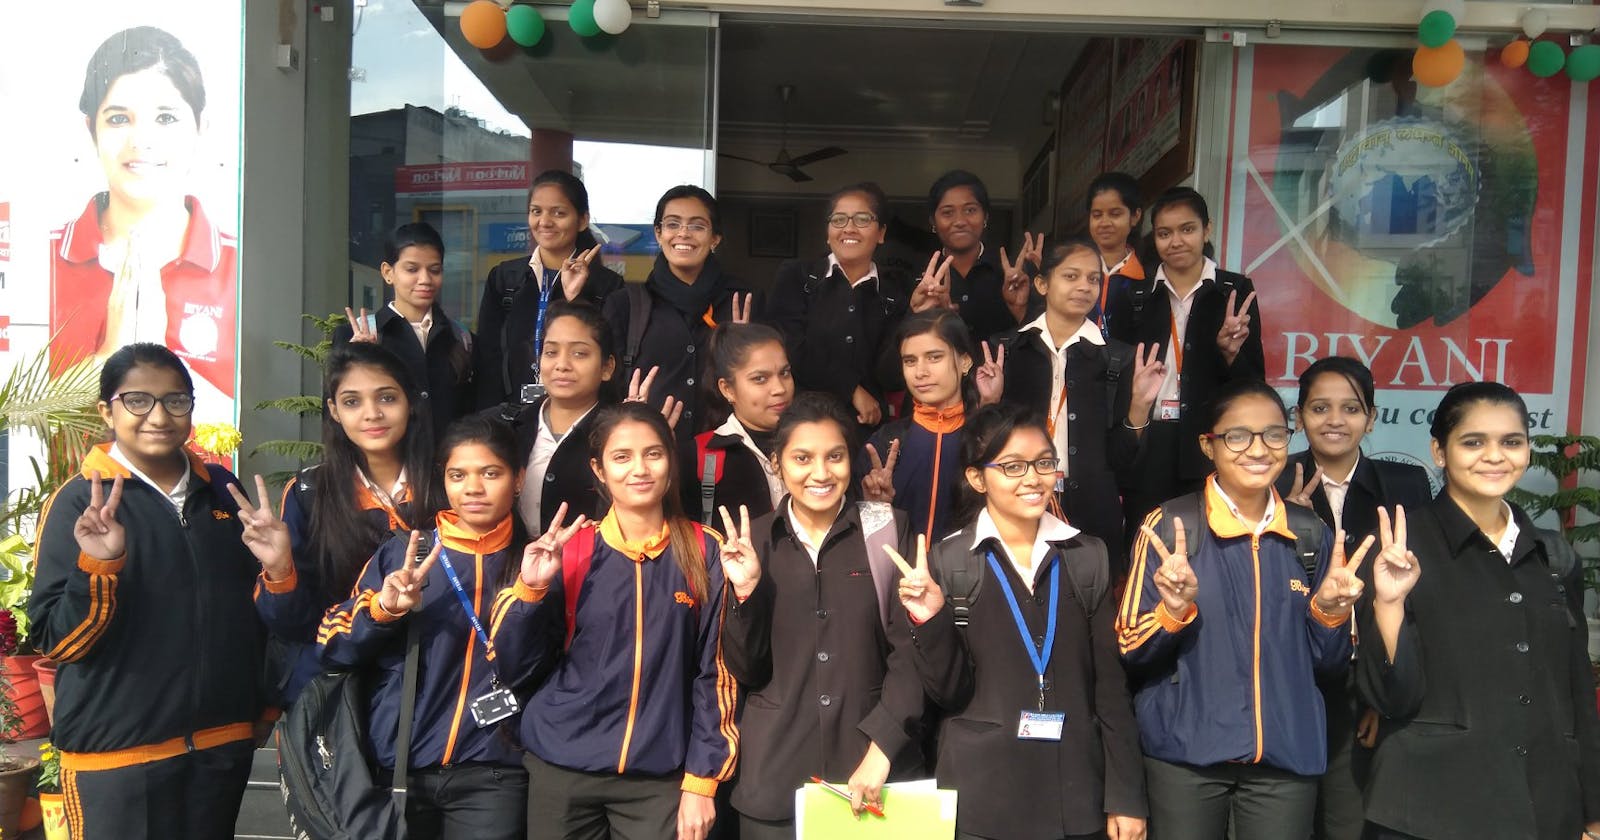 A Closer Look at BCA Programs at Biyani Girls College in Jaipur